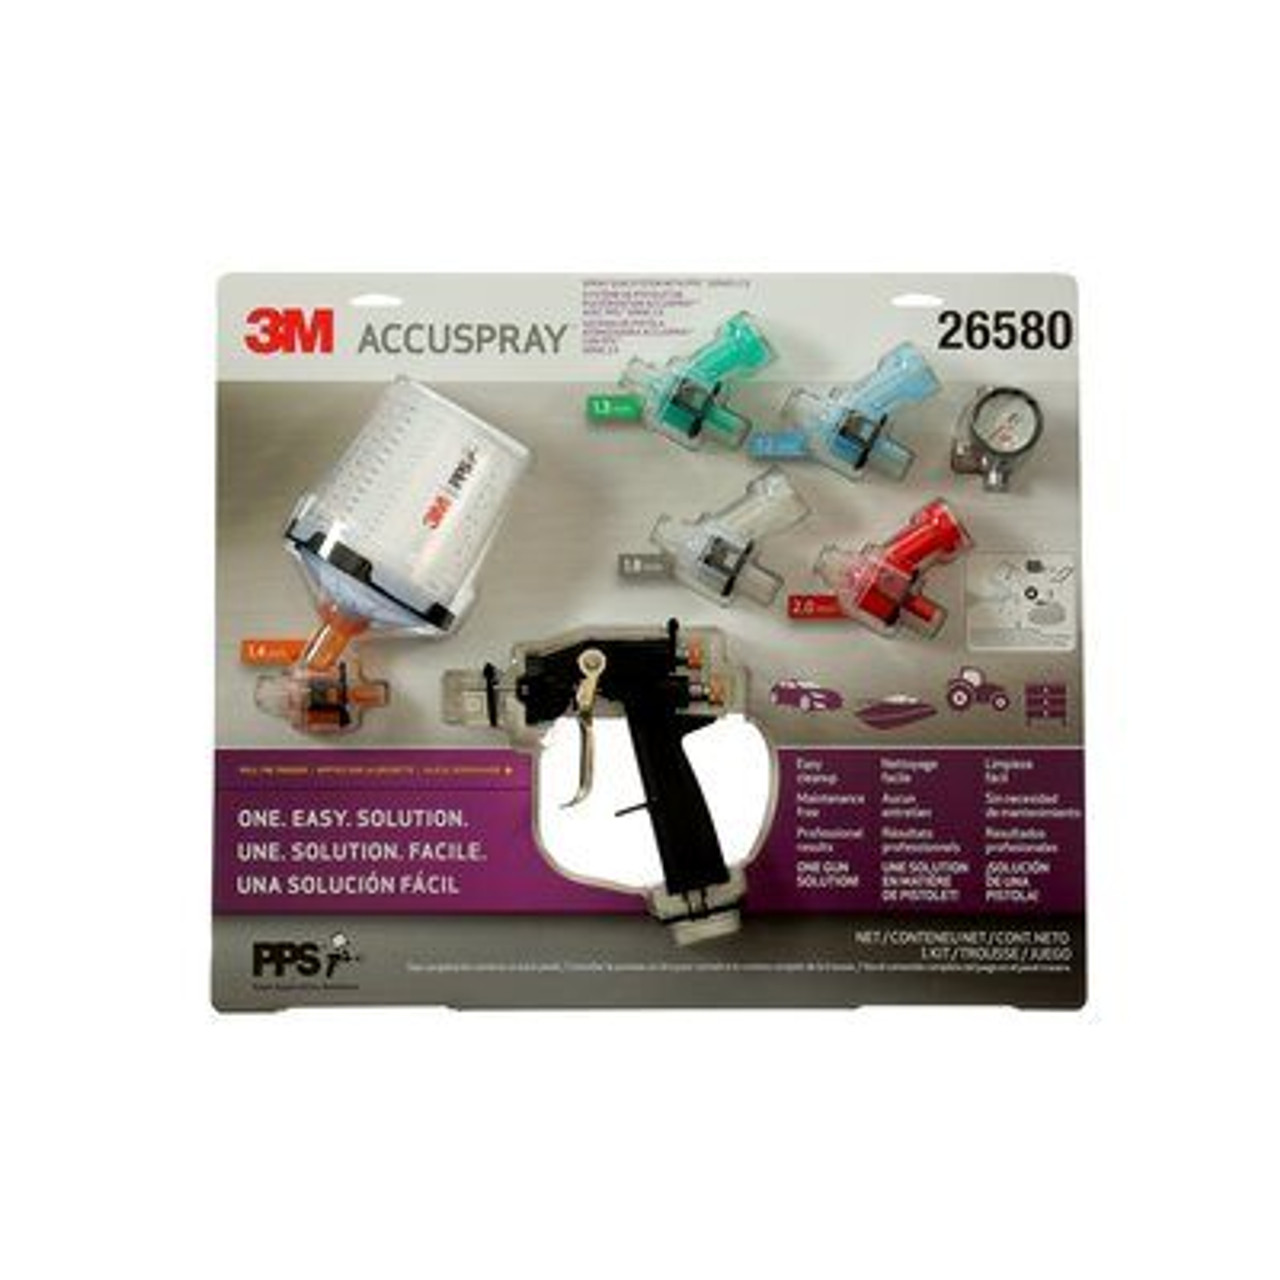 Accuspray™ ONE Pro Spray Gun Kit per case